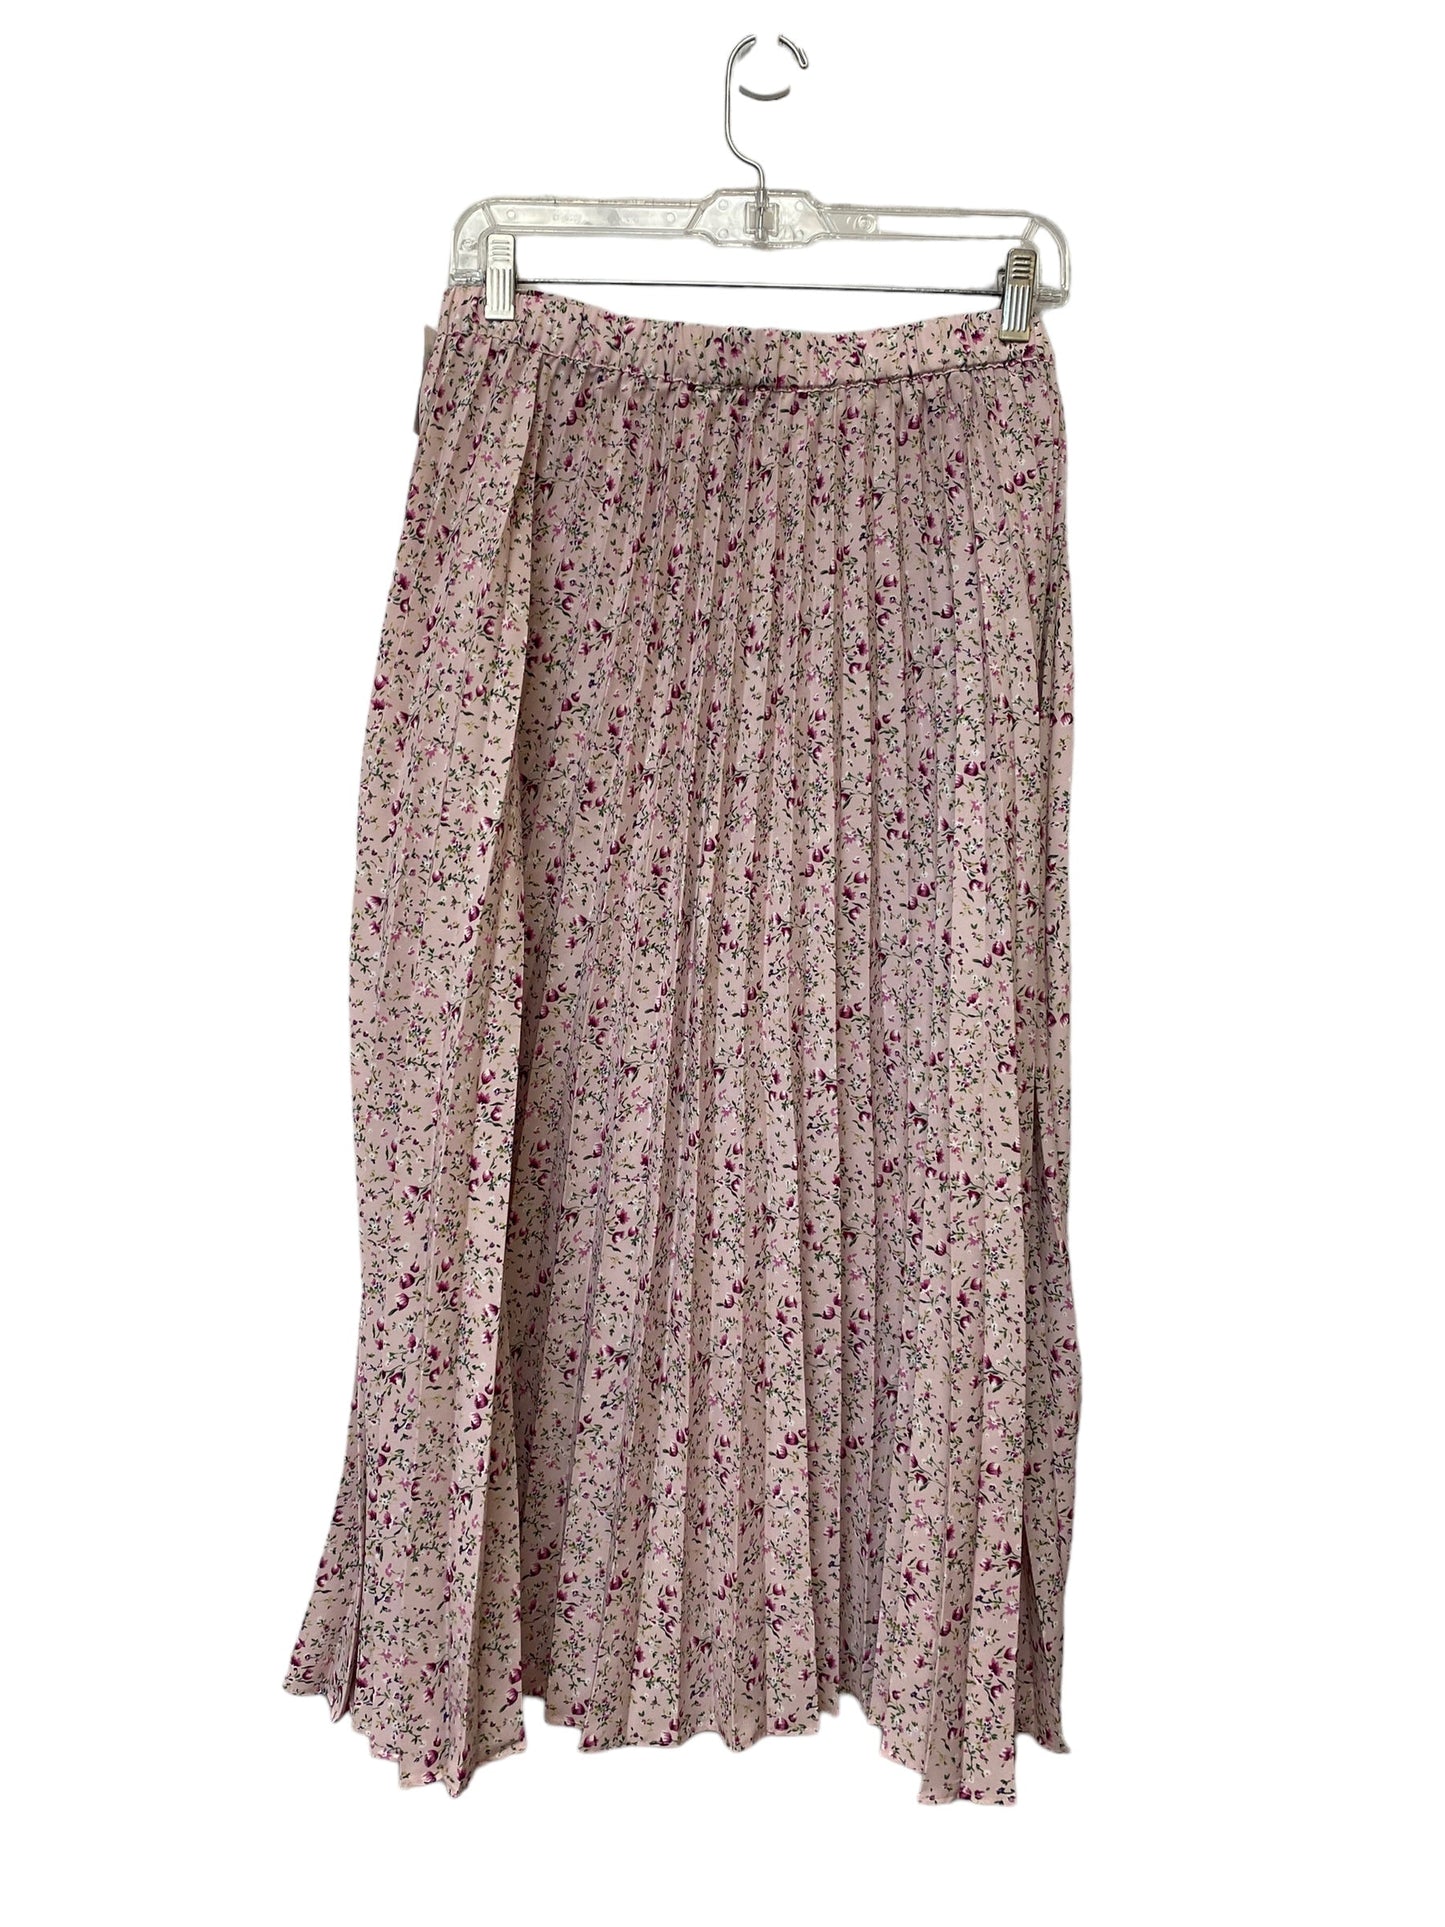 Skirt Maxi By Pleione  Size: L